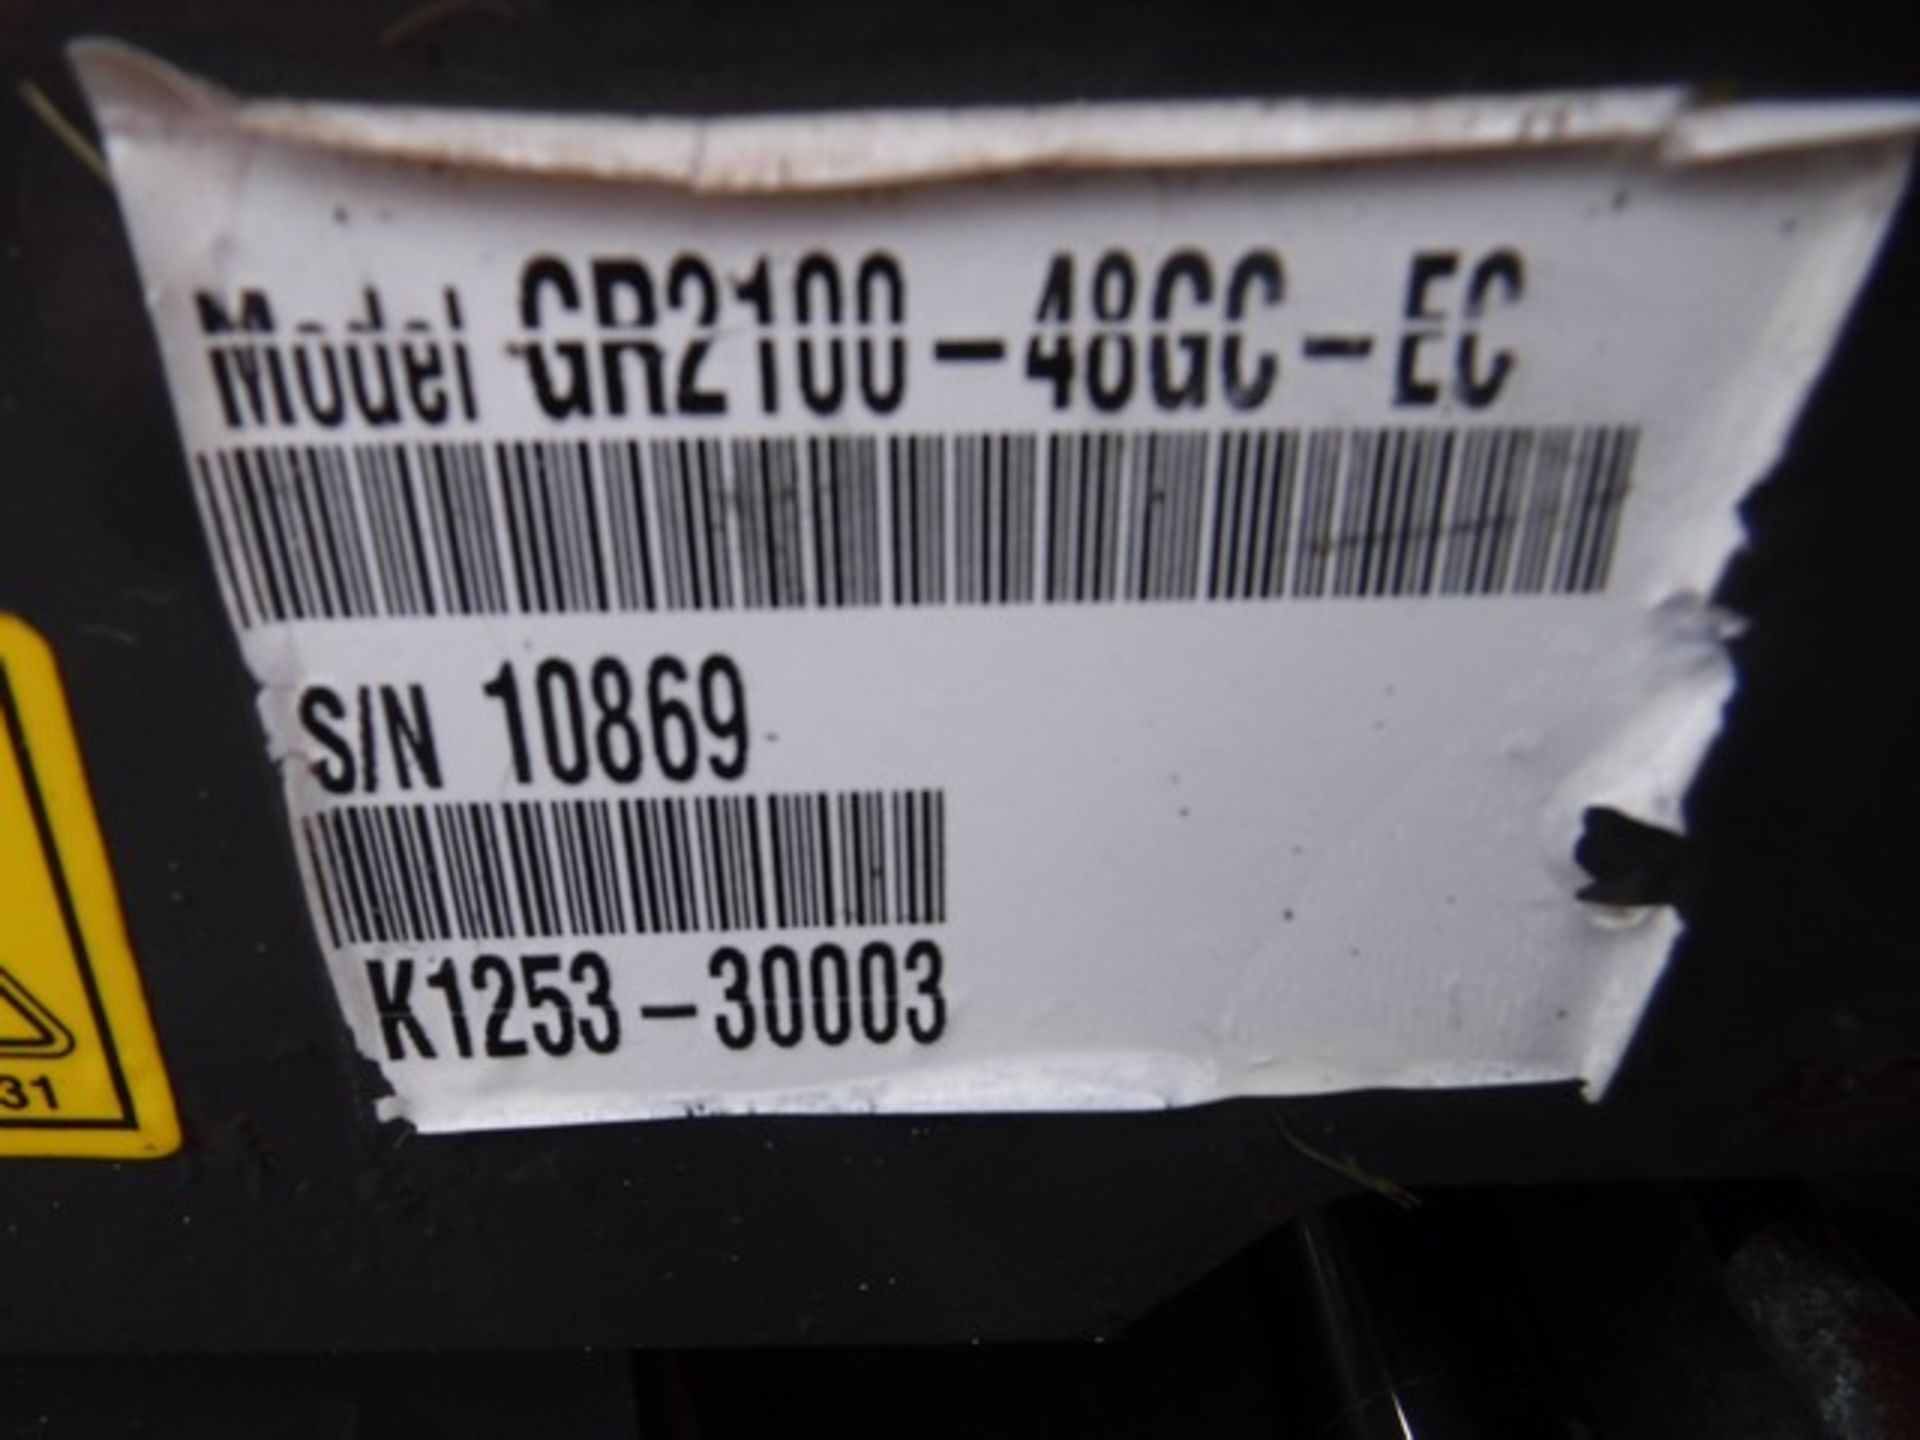 2005 KUBOTA GR2100EC DIESEL RIDE ON MOWER C/W 48" CUTTING DECK & COLLECTION 4WD S/N 10869 - Image 2 of 11